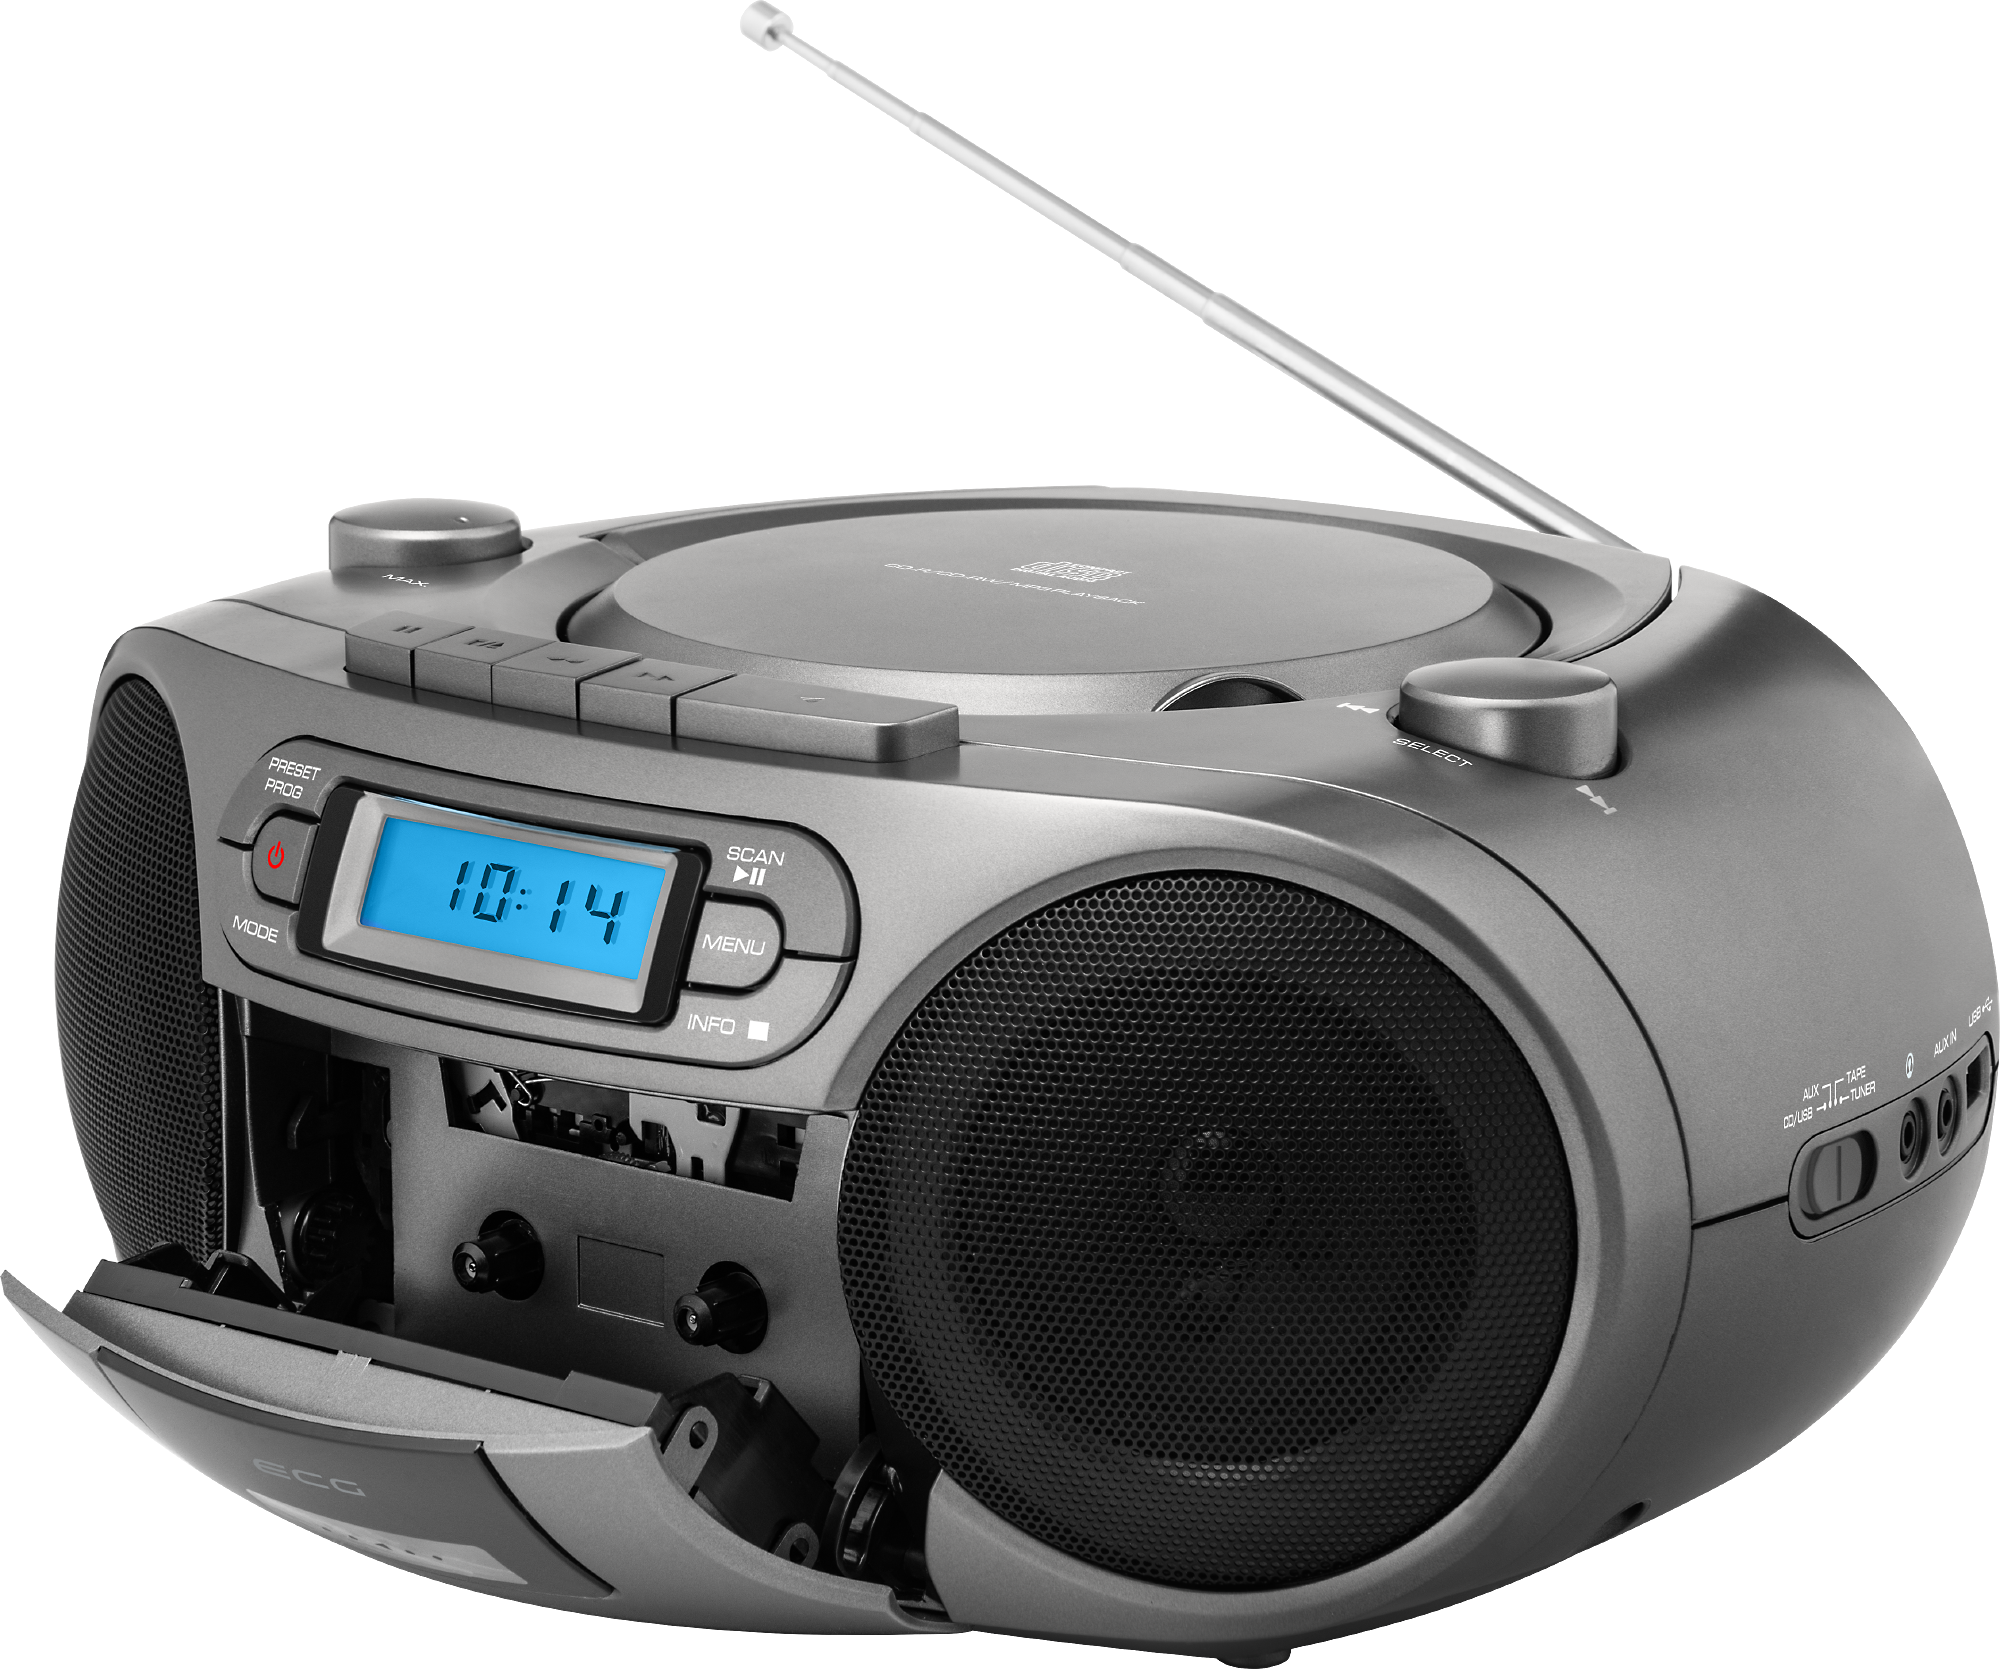 ECG CDR 999 DAB - DAB + / FM radio with CD / Cassette player